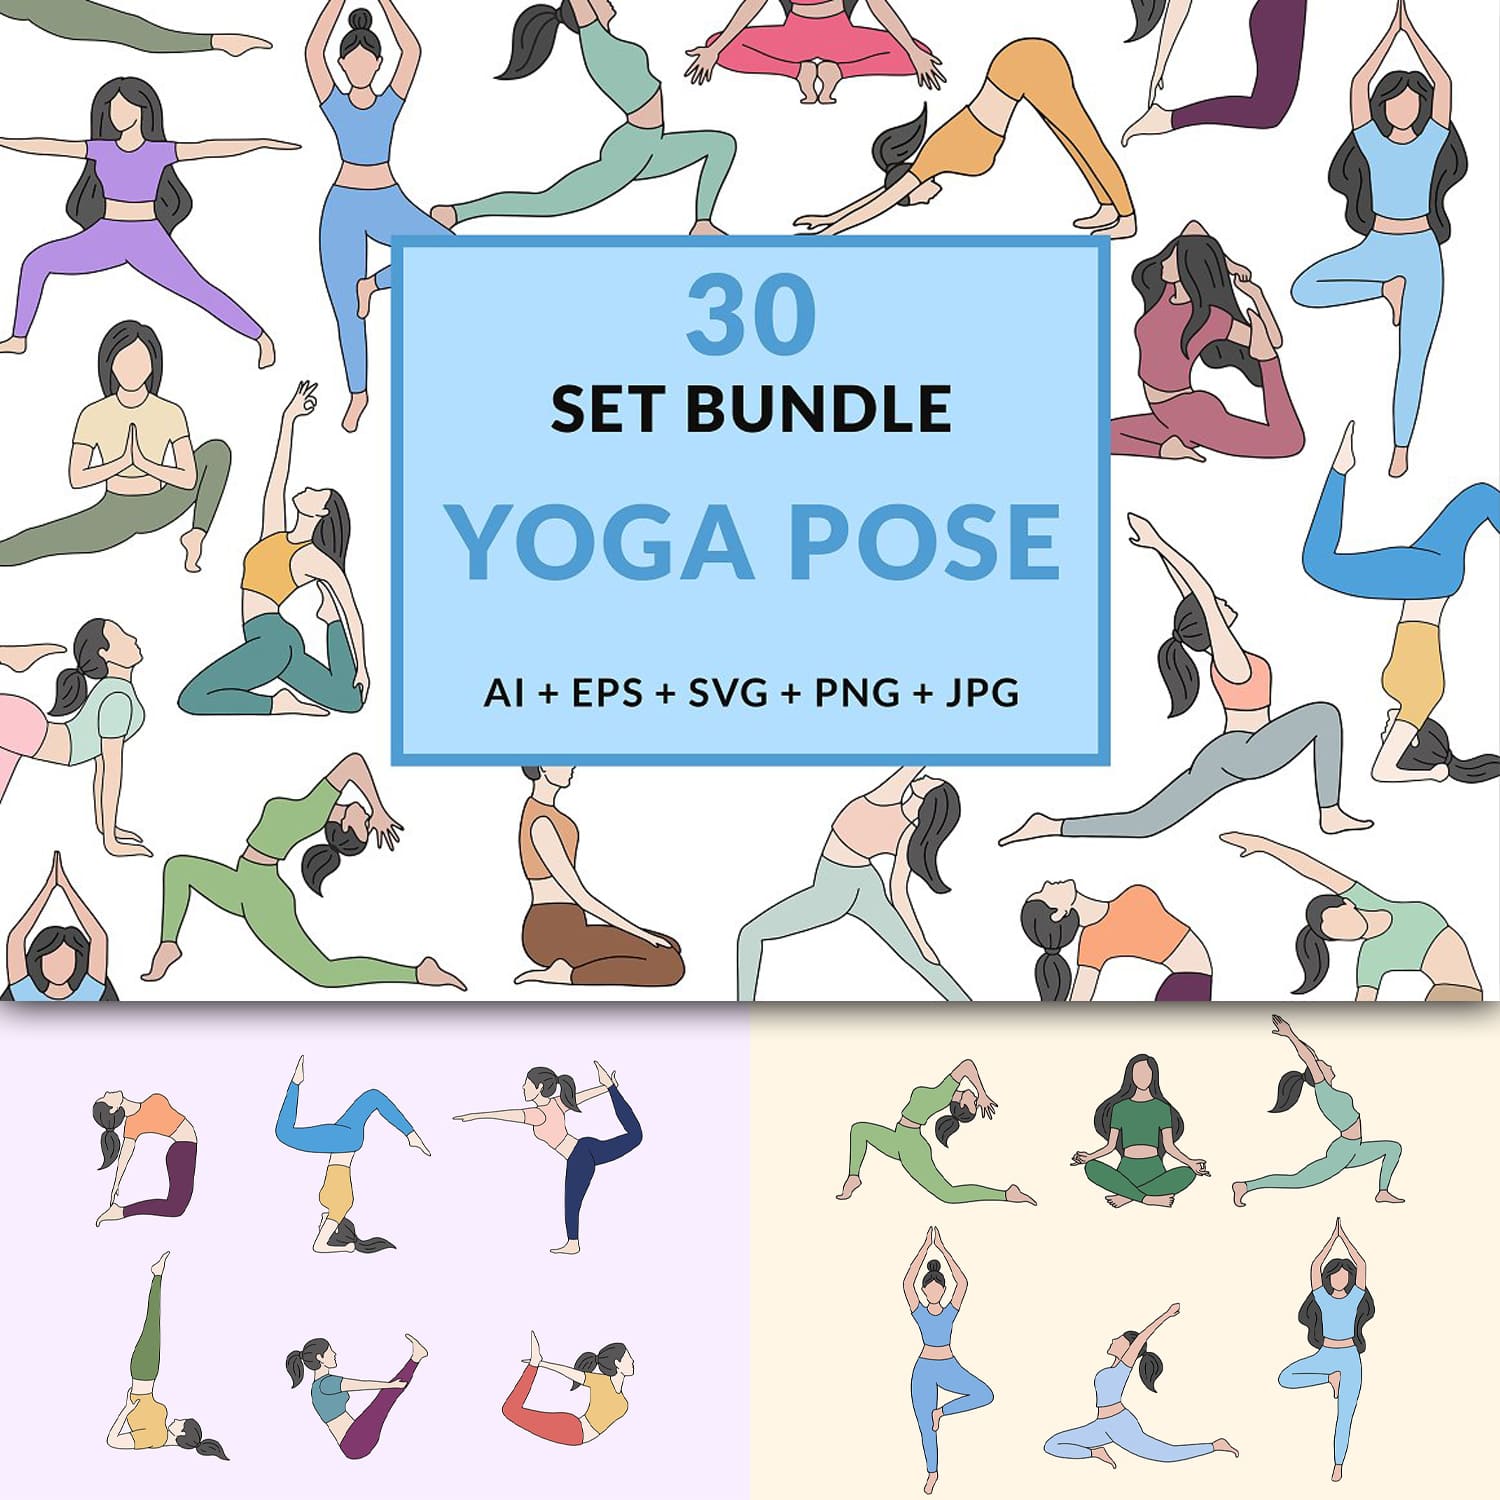 30 bundle women yoga pose wellness - main image preview.